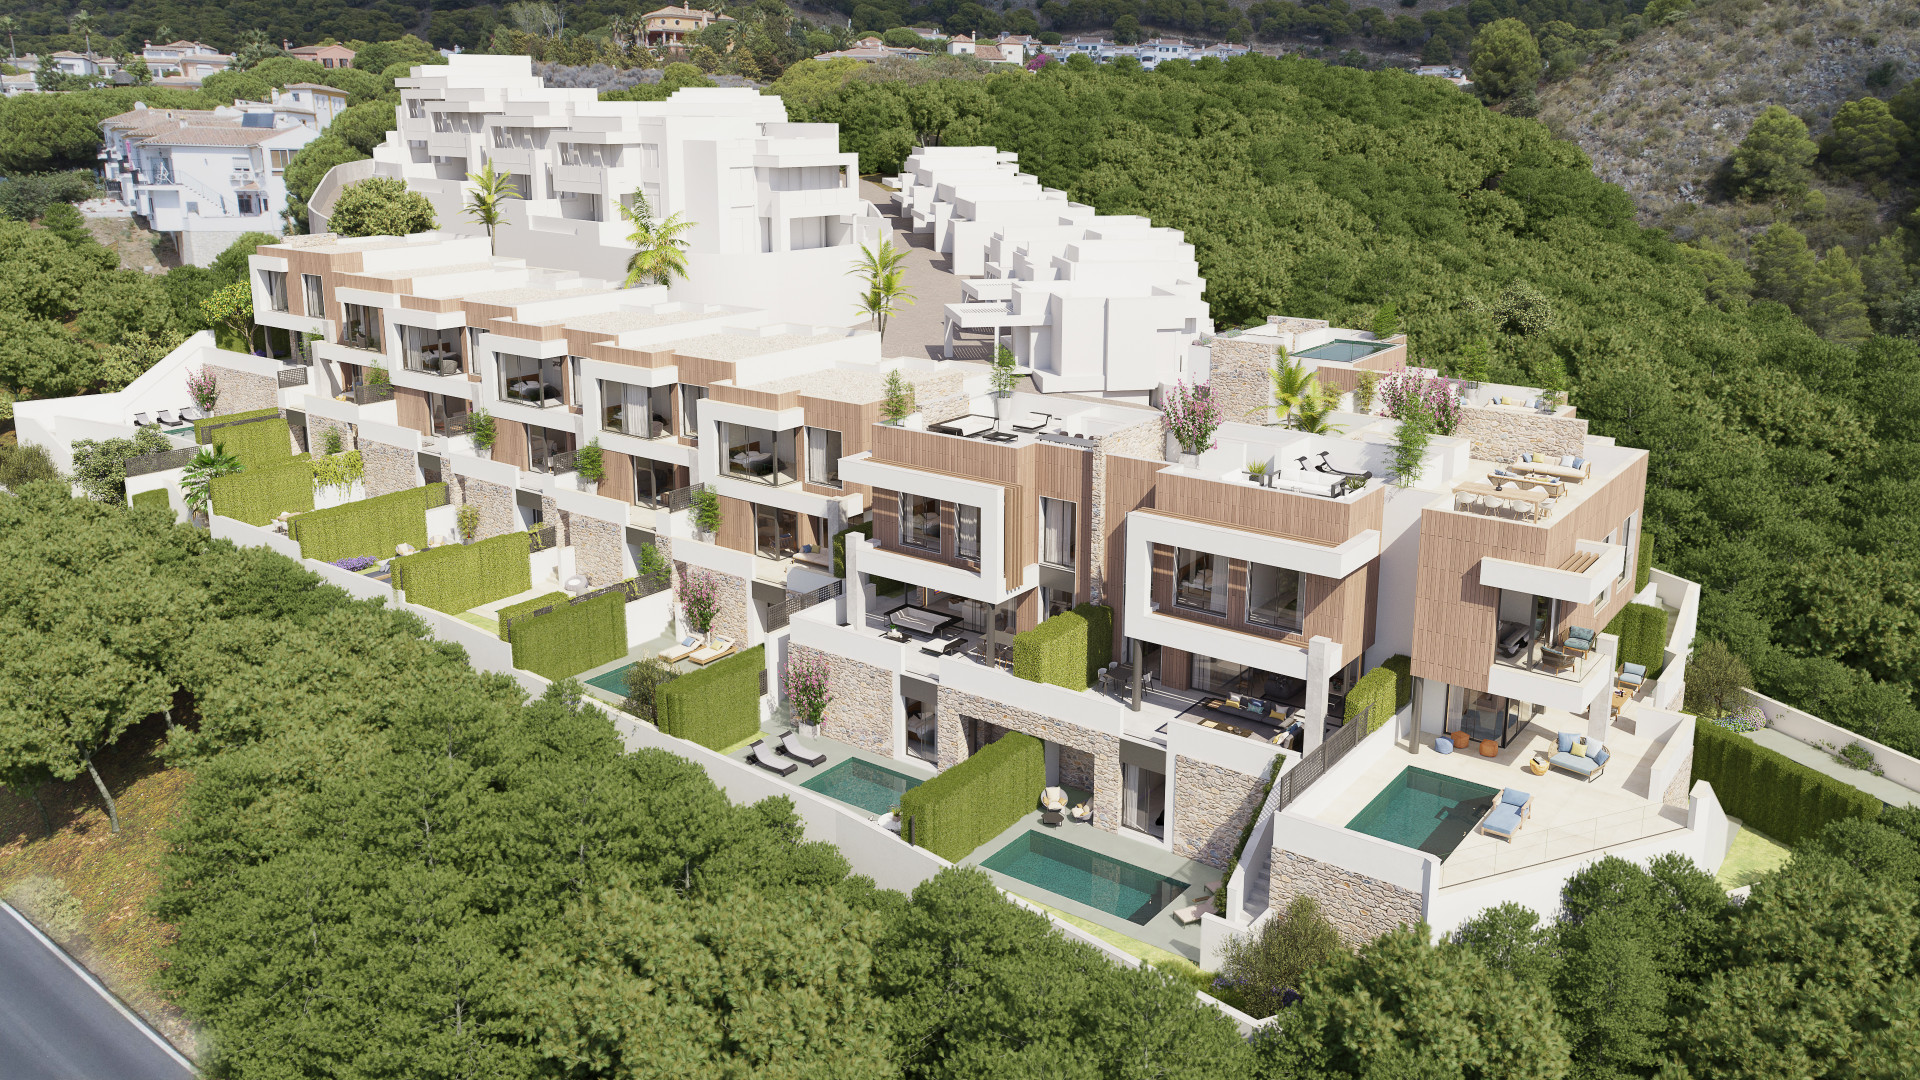 Buenavista Views: Development of 32 semi-detached villas with sea views located in Mijas Costa.